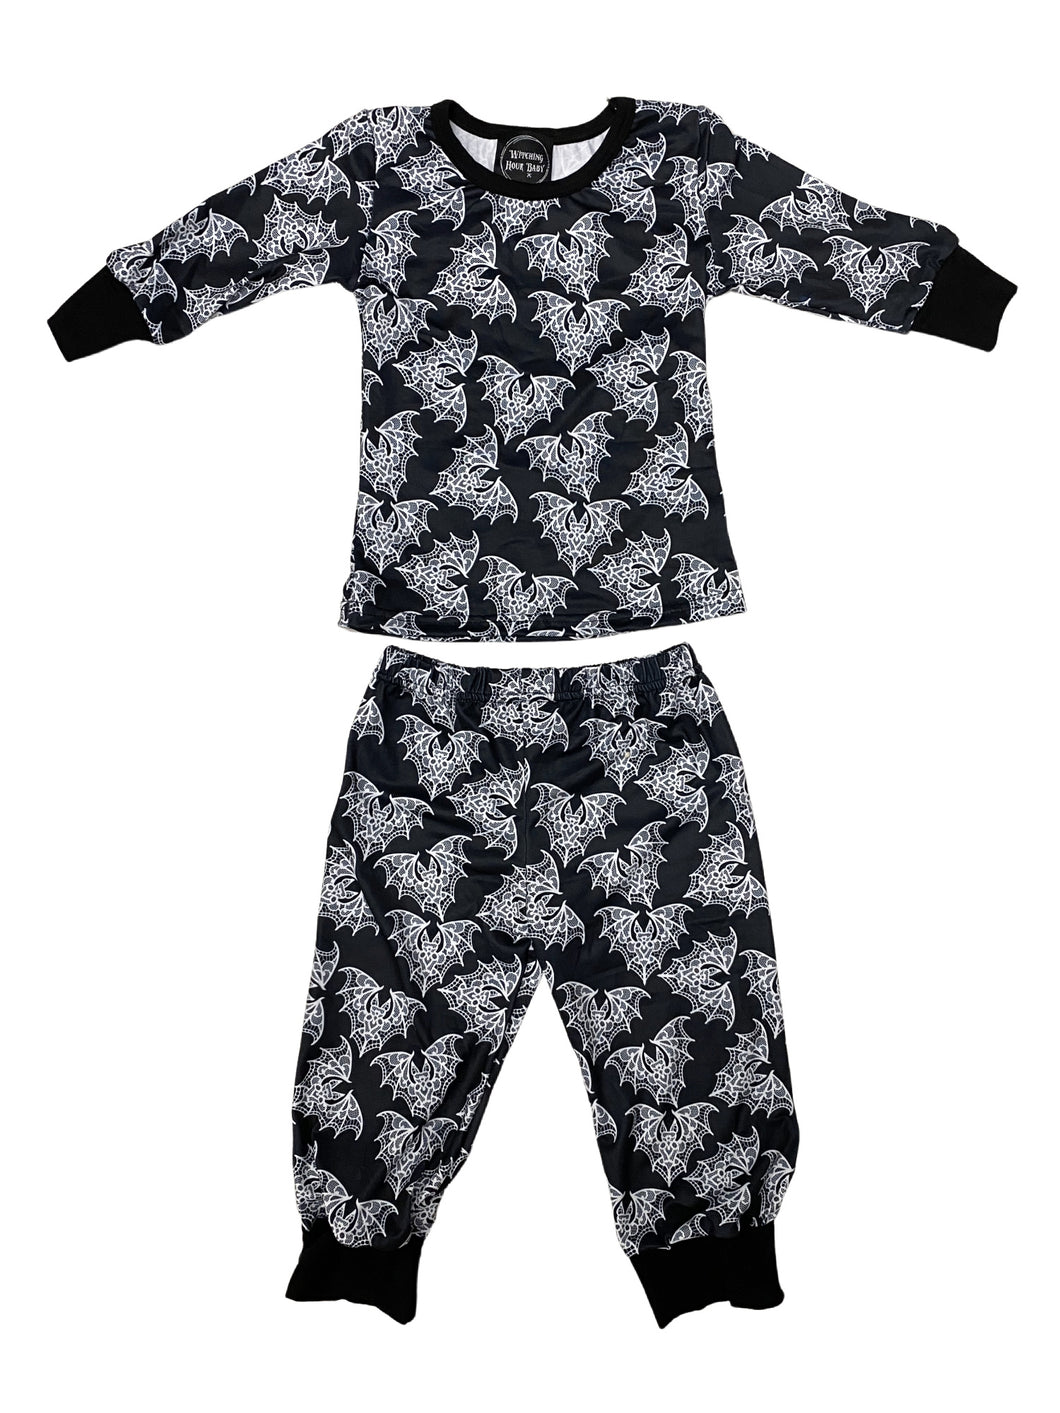 Lace Bat 2 Piece Pajamas (Toddlers/Kids)